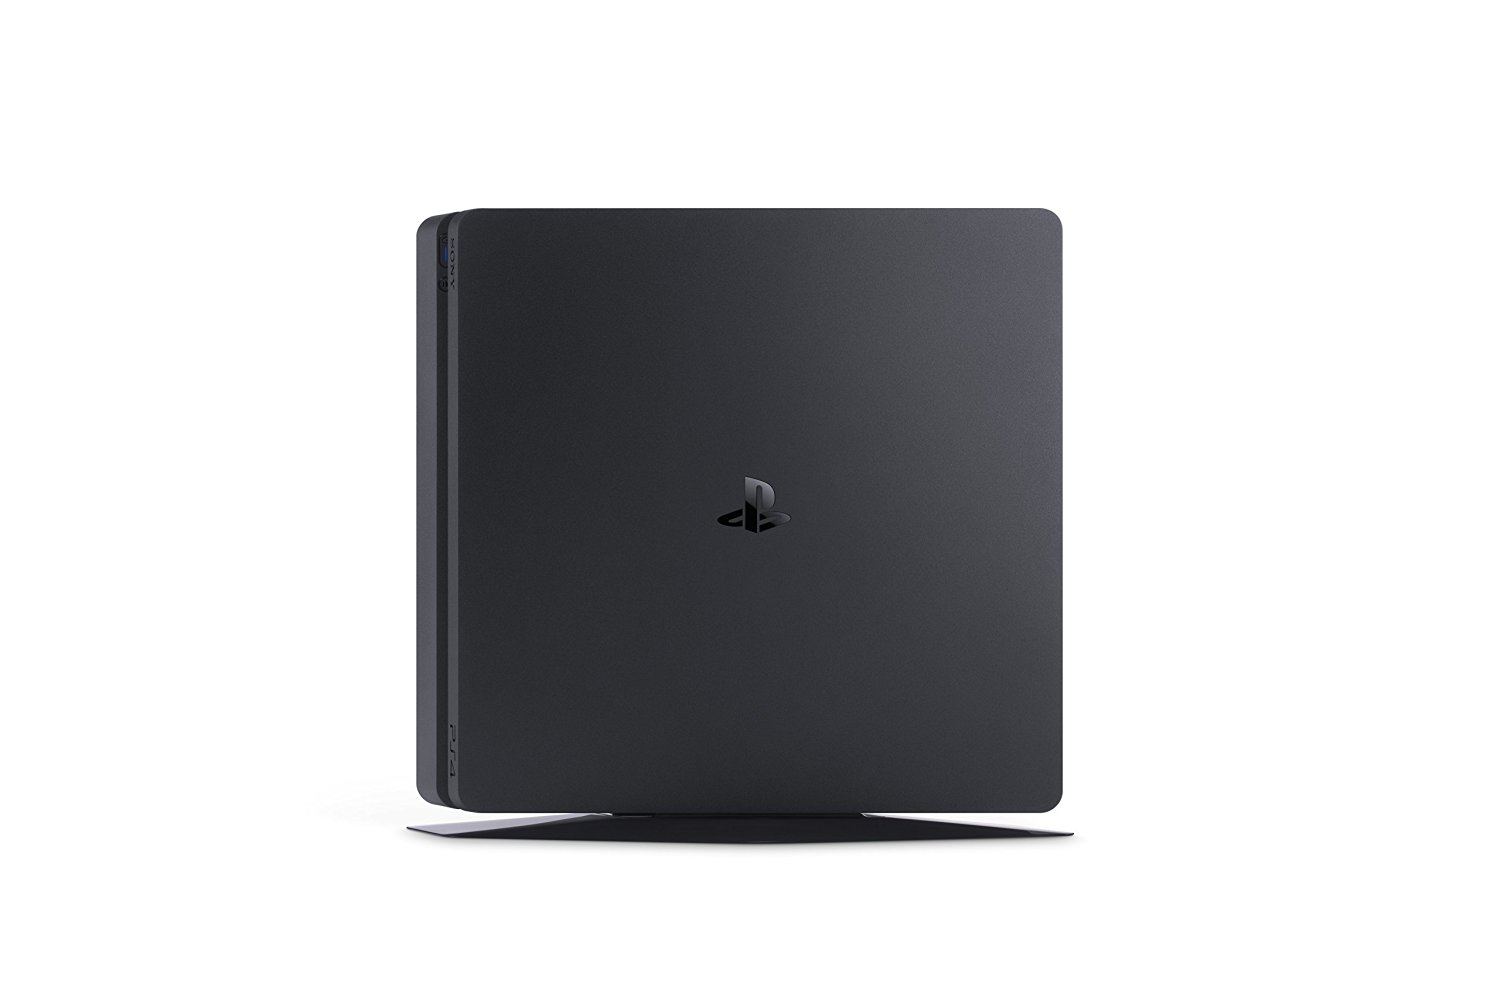 PlayStation 4 CUH-2000 Series 500GB HDD (Jet Black)